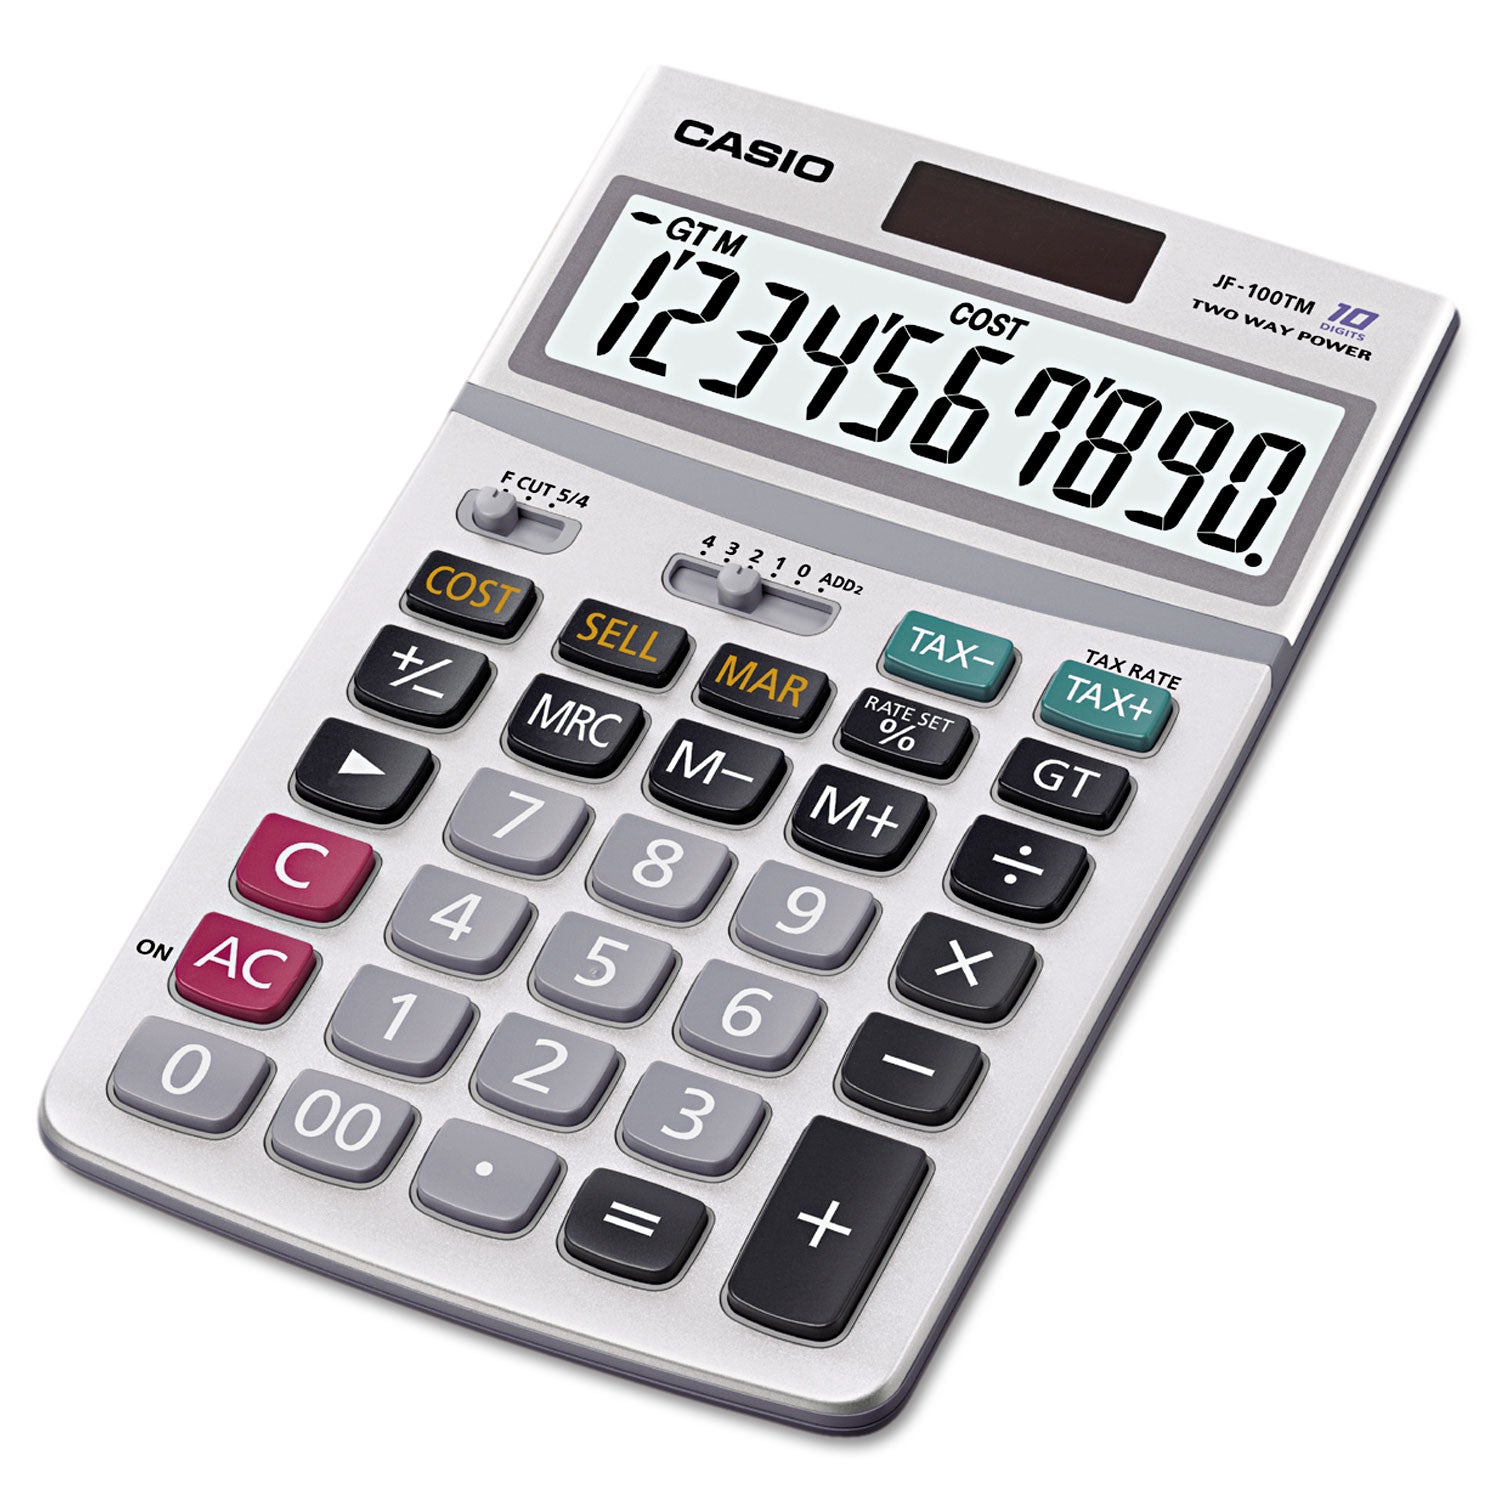 jf100ms-desktop-calculator-10-digit-lcd_csojf100bm - 1